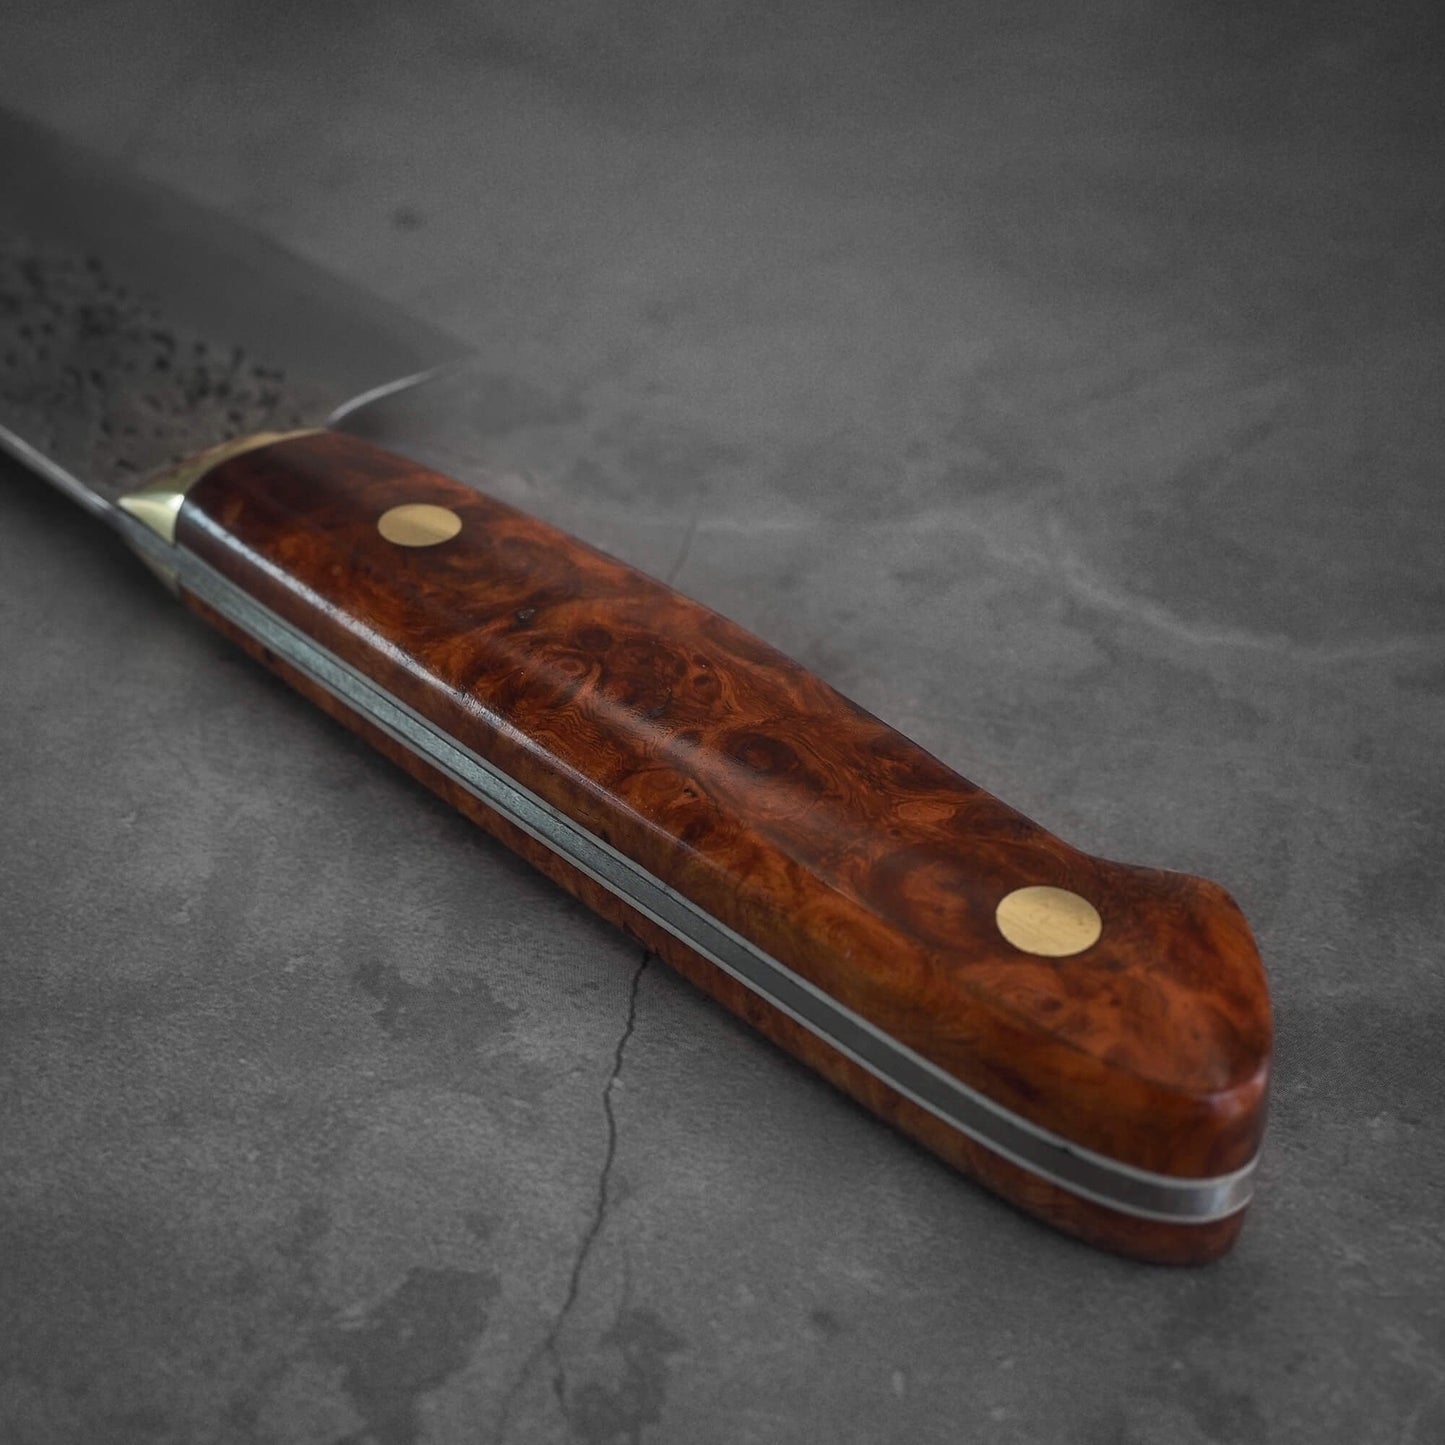 An angled view and close up shot of the handle of a 220mm Kisuke Manaka tsuchime honwarikomi shirogami#2 gyuto knife